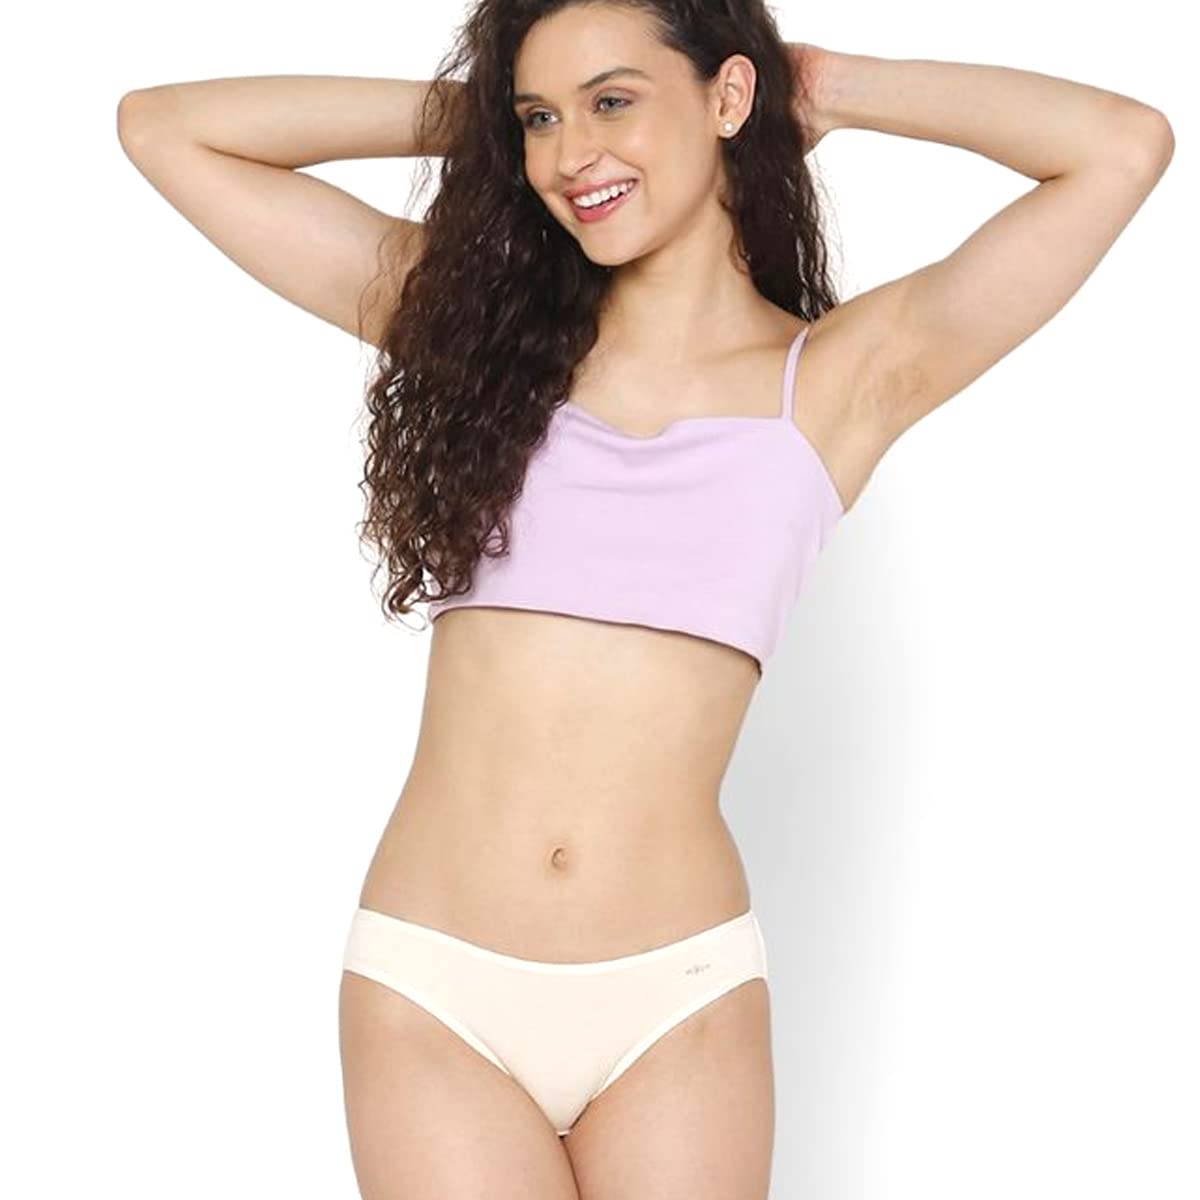 Mush Womens Ultra Soft Bamboo Modal Bikini Brief || Breathable Panties || Anti-Odor, Seamless, Anti Microbial Innerwear Pack of 3 (XL, Beige)